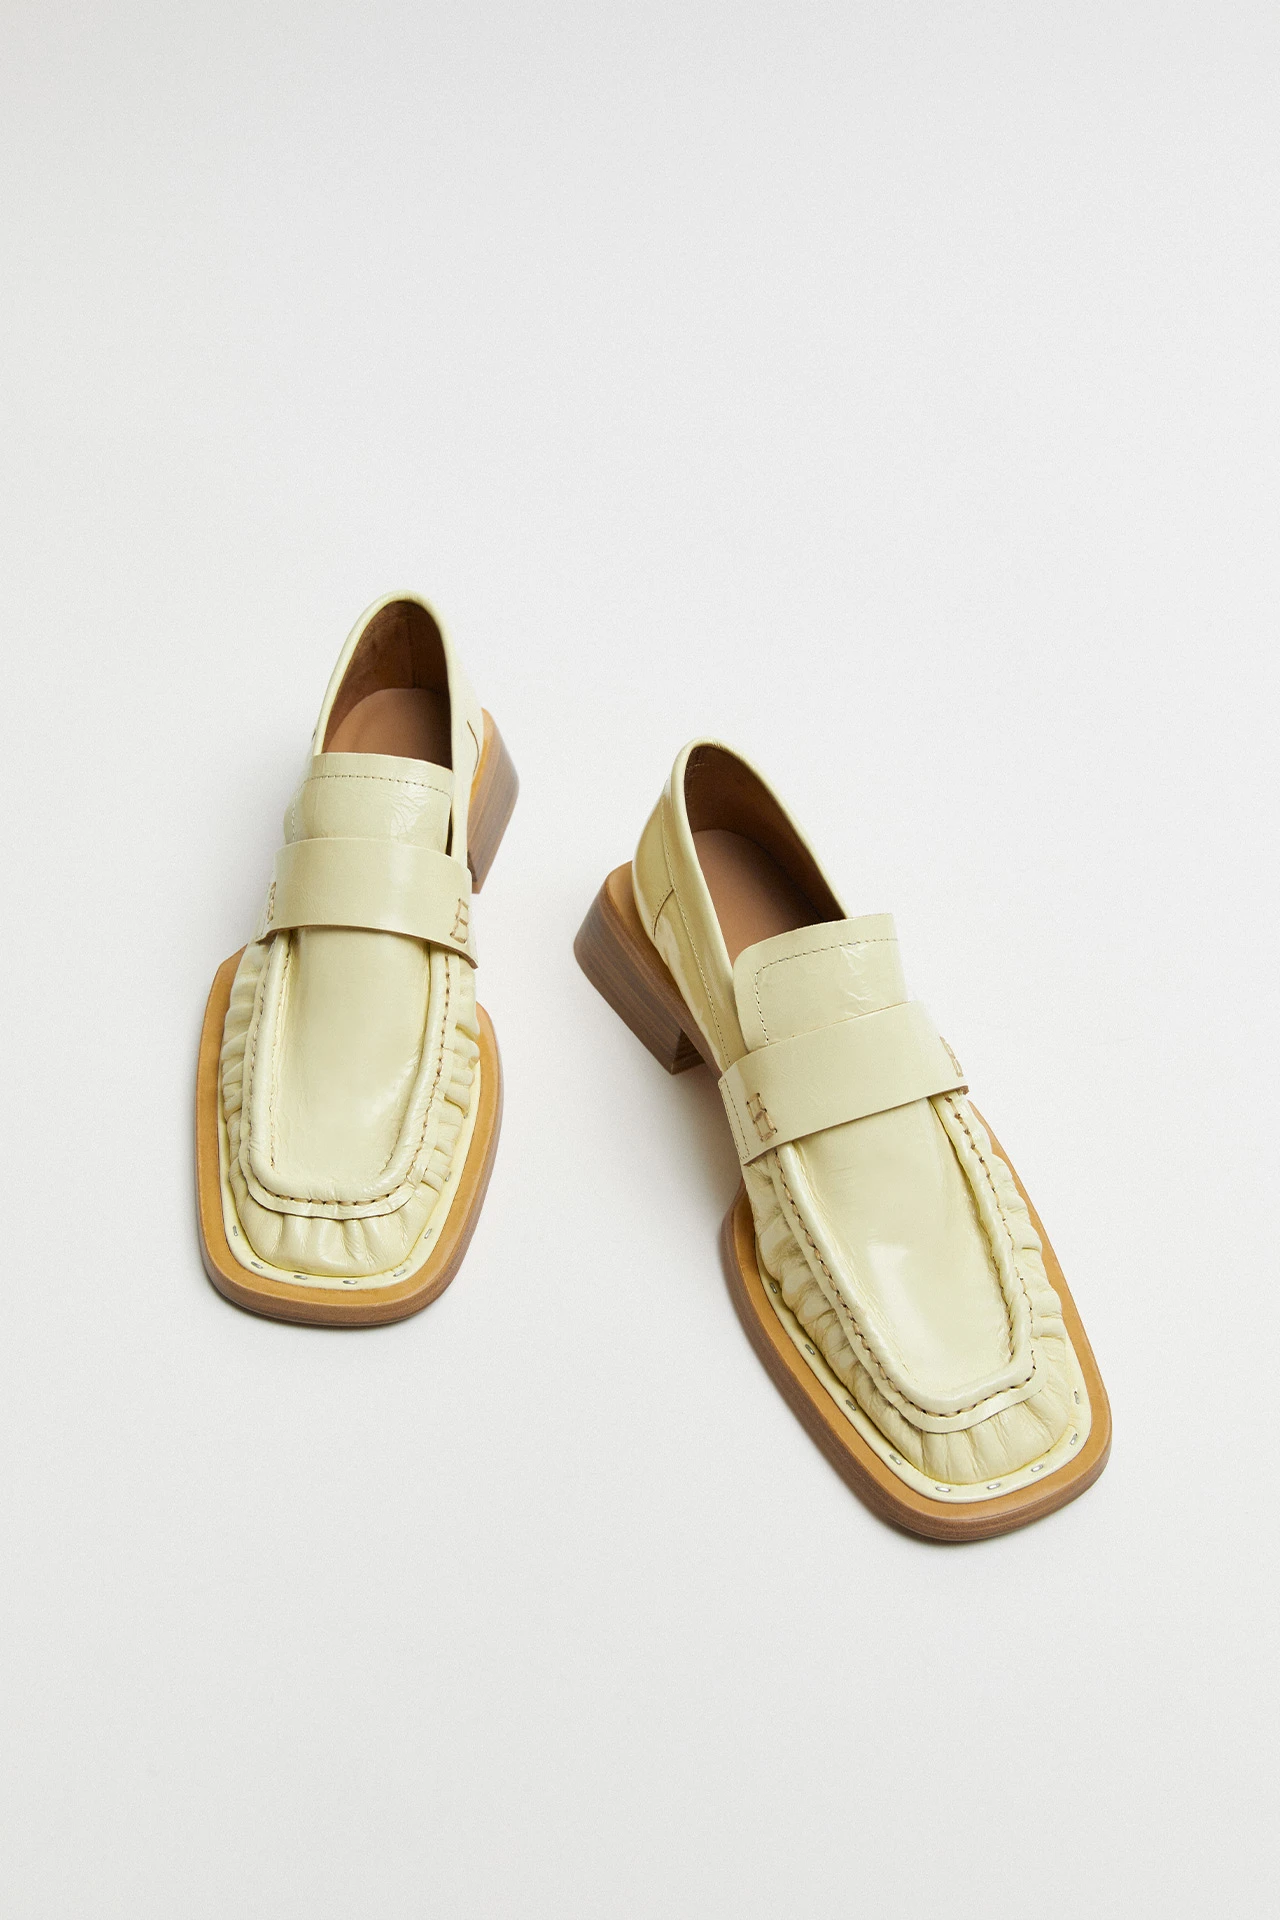 Miista-Airi-White-Cream-Loafers-03